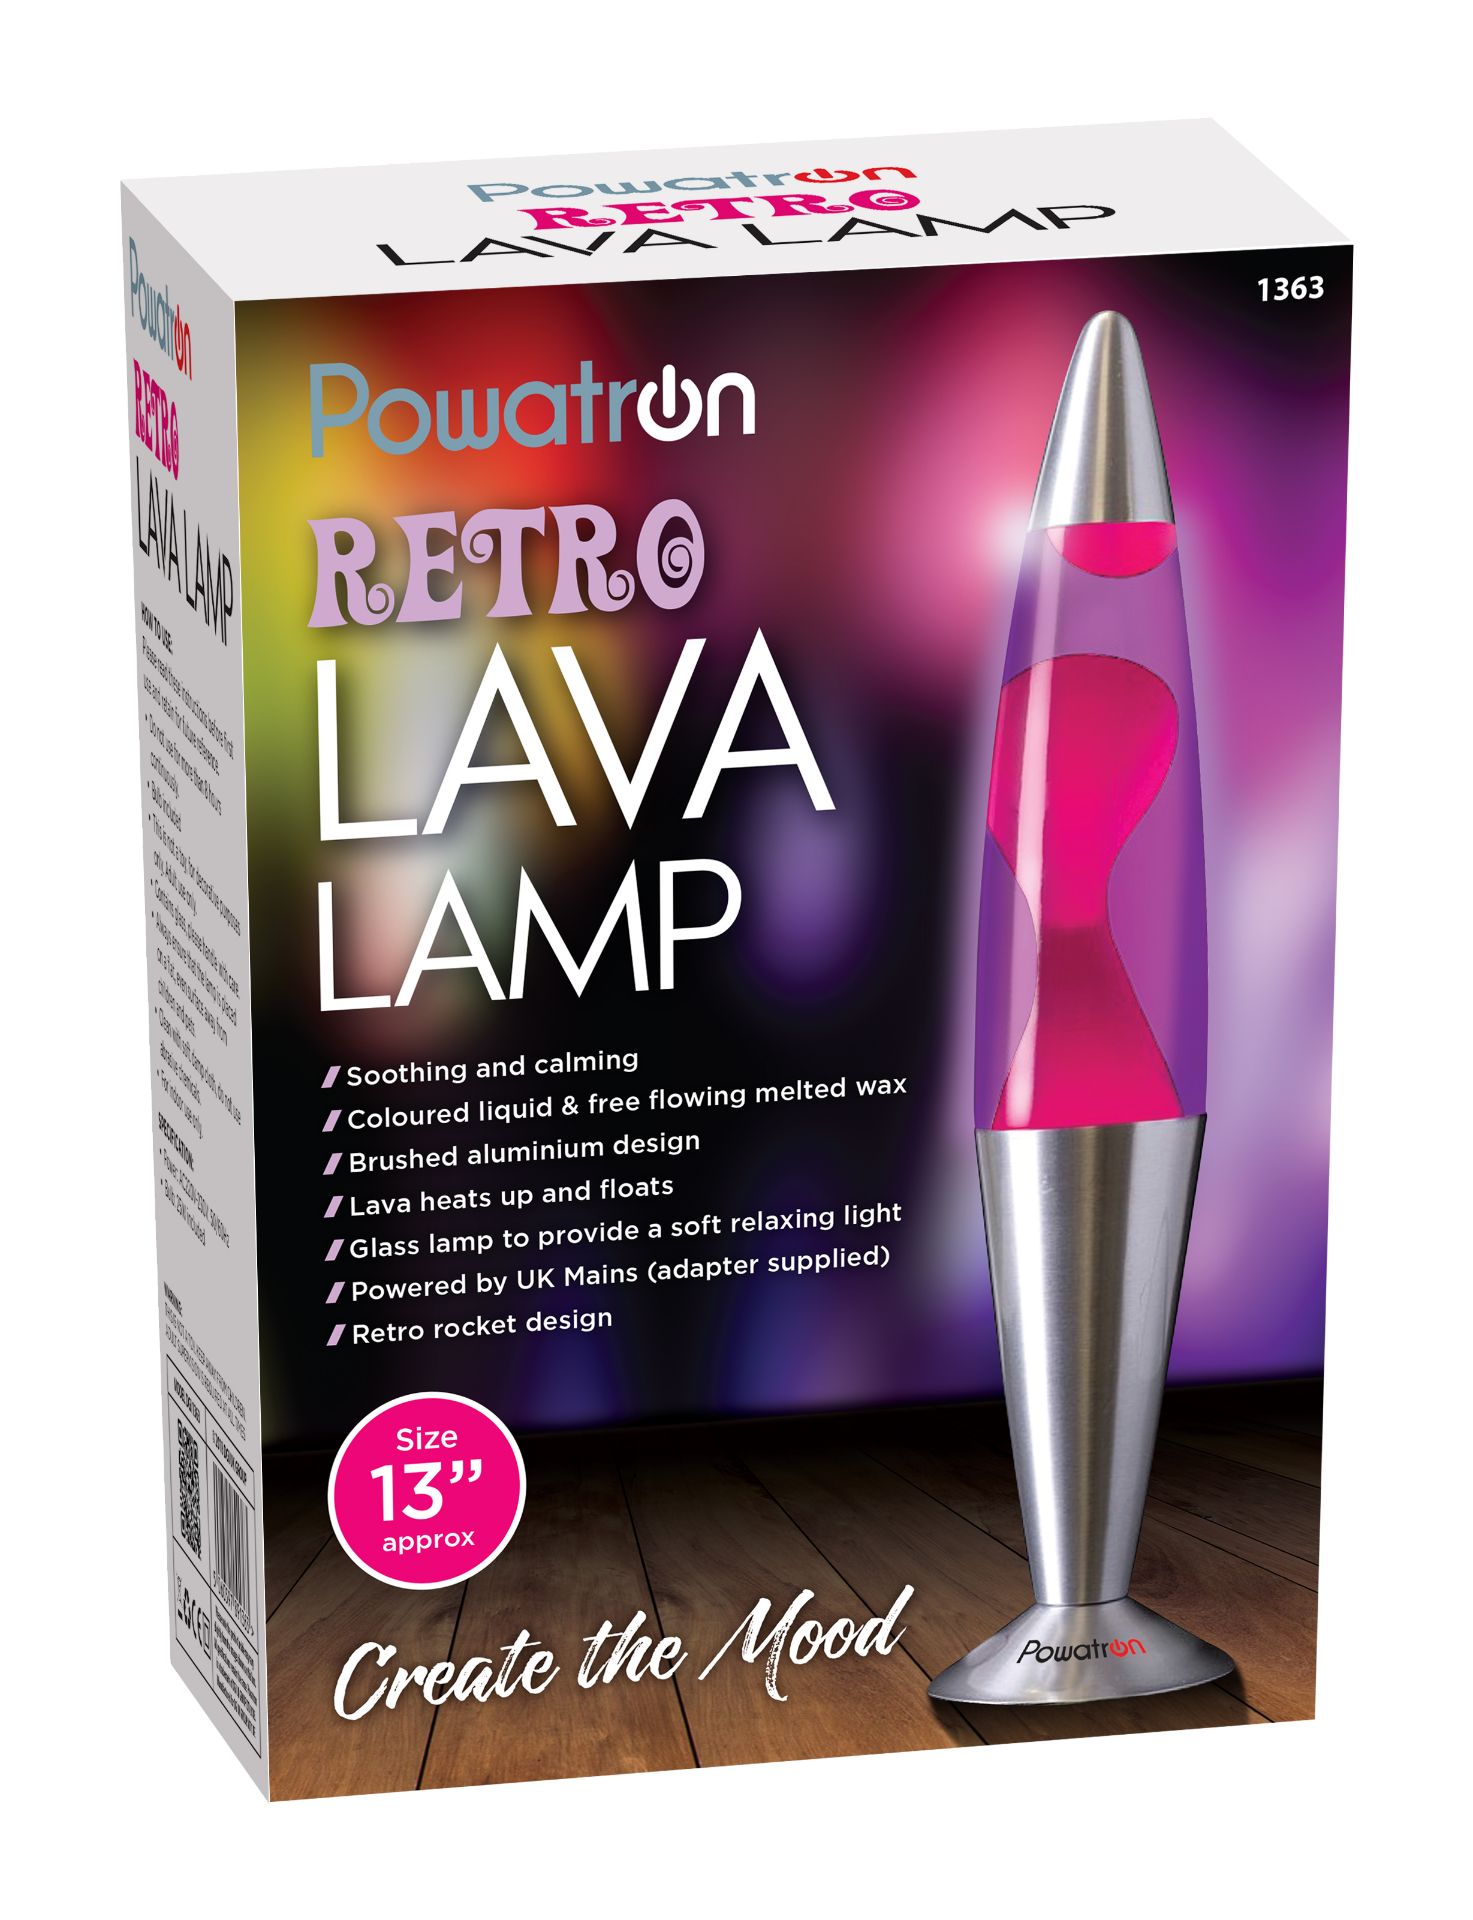 V Brand New Powatron 13 Inch Retro Lava Lamp - Retro Rocket Design - Coloured Liquid and Free